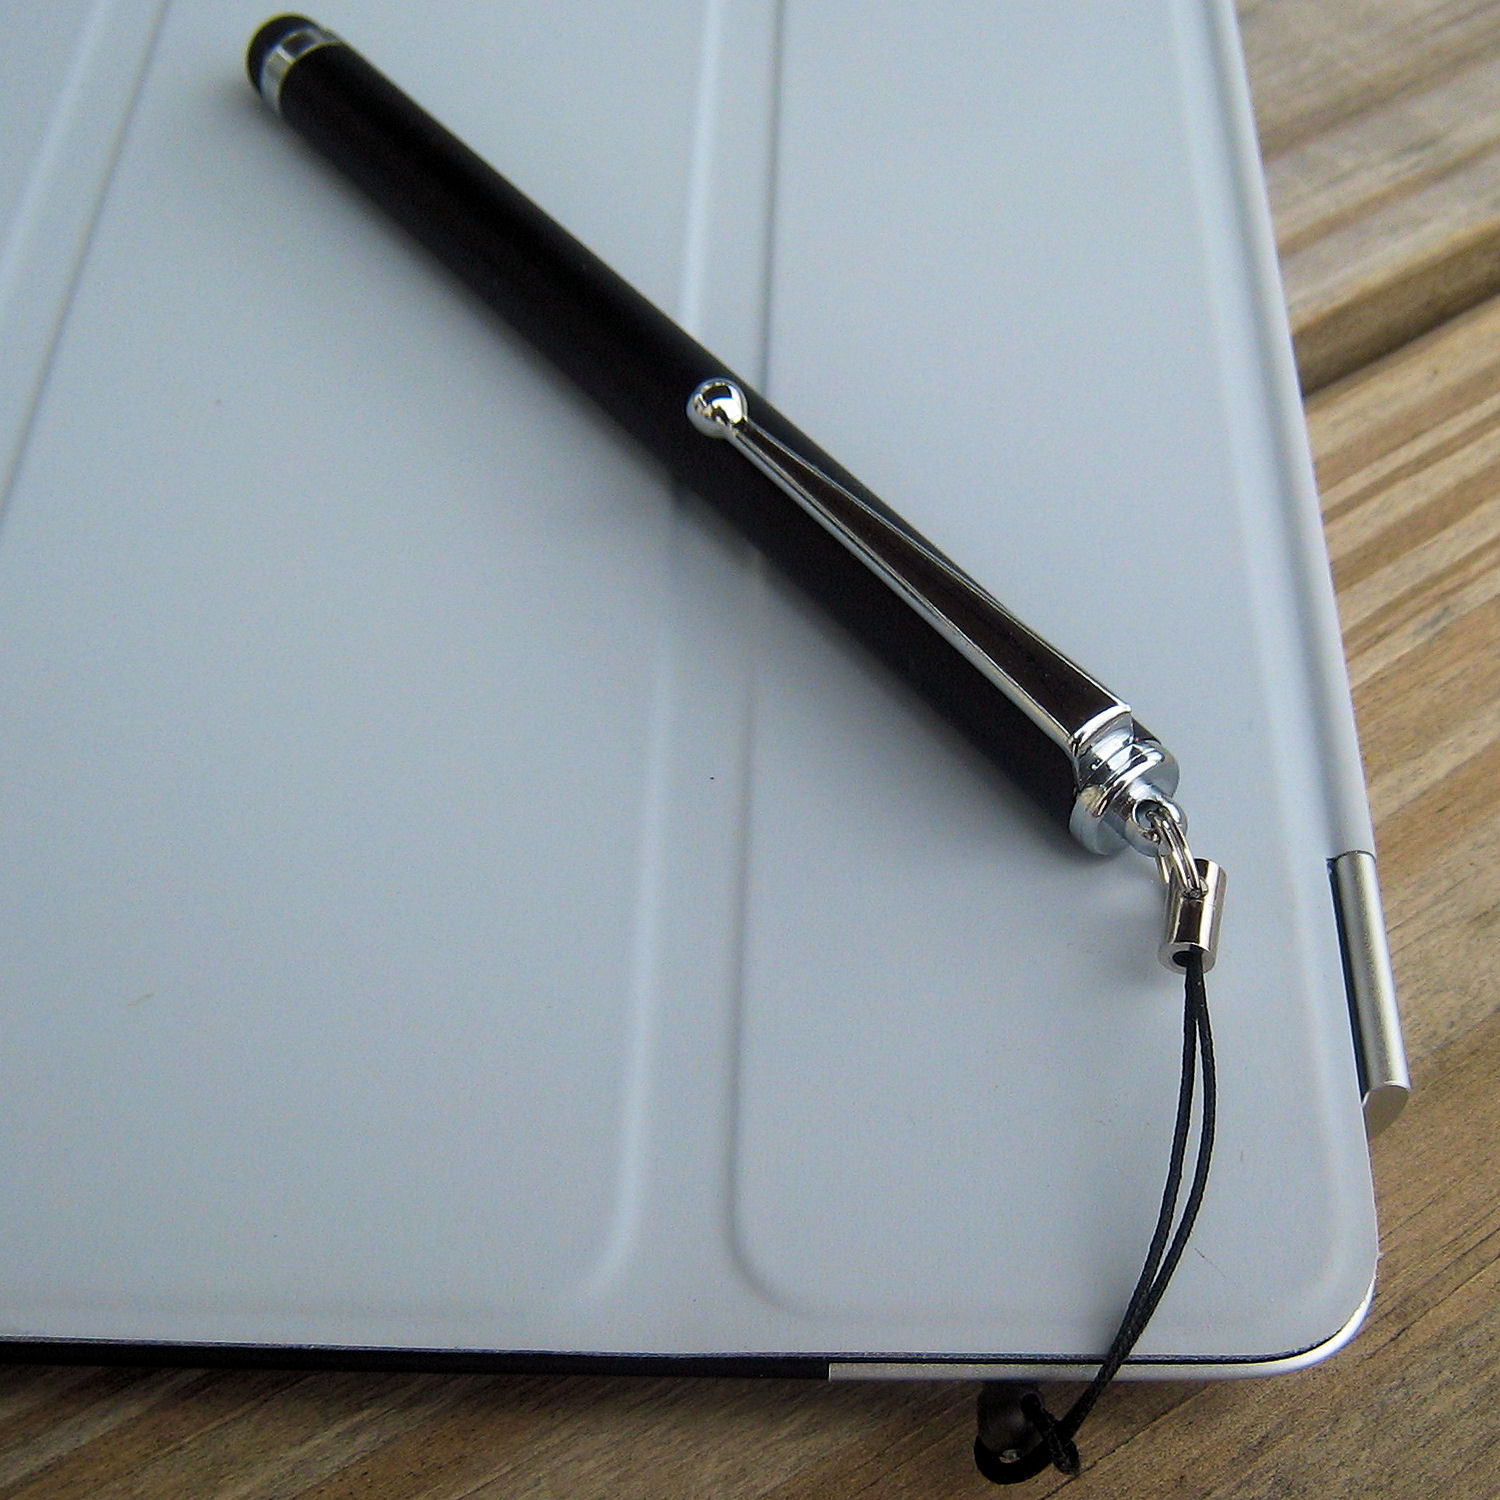 Gomadic Precision Tip Capacitive Stylus Pen designed for the Nextbook Next6 (Black Color) - Lifetime Warranty